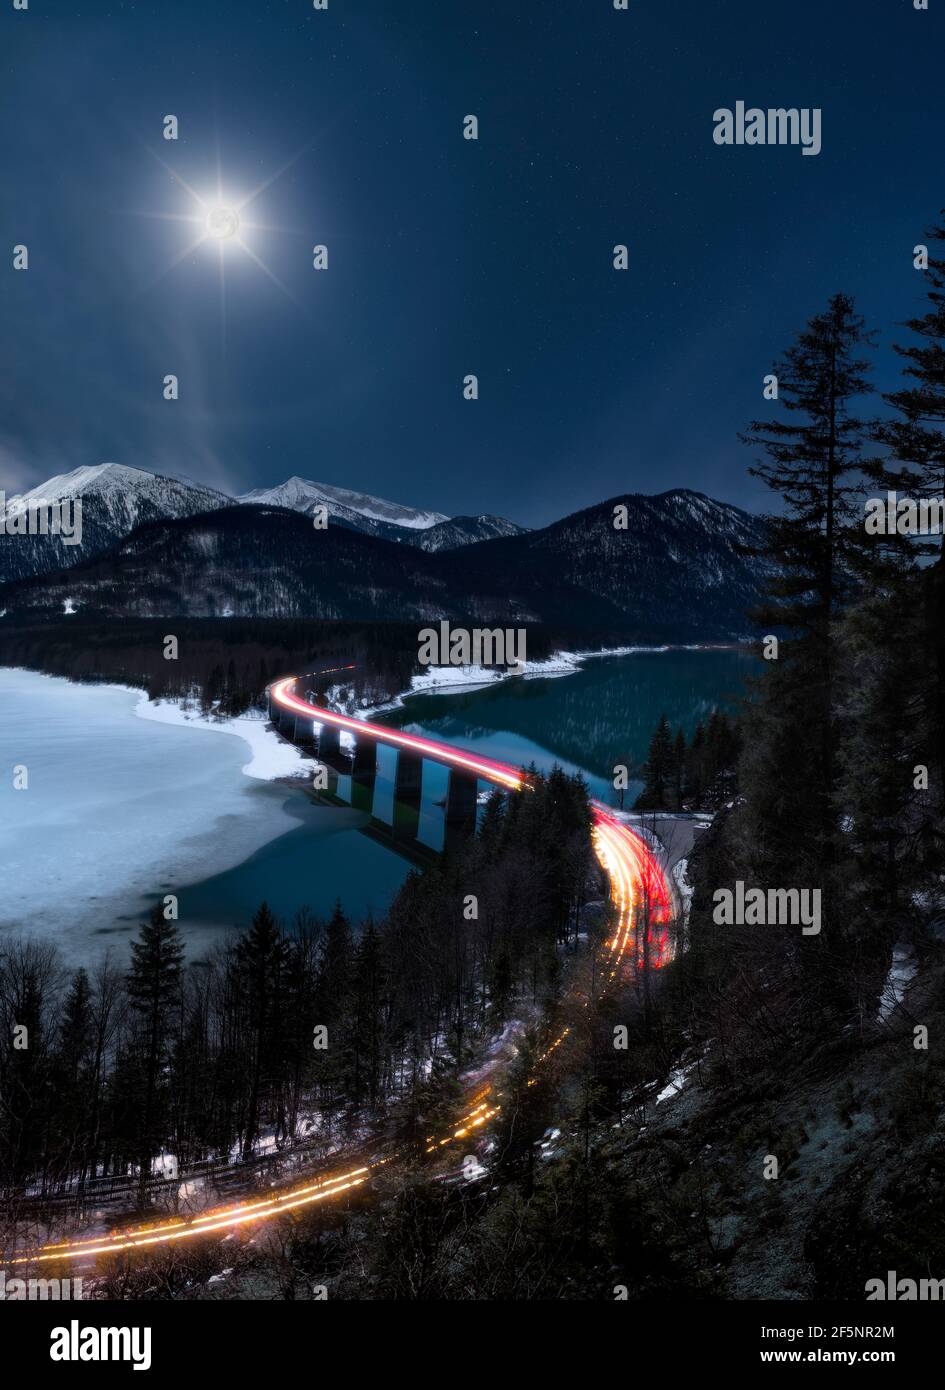 Road into the mountain at night - full moon with halo illuminating the scene Stock Photo